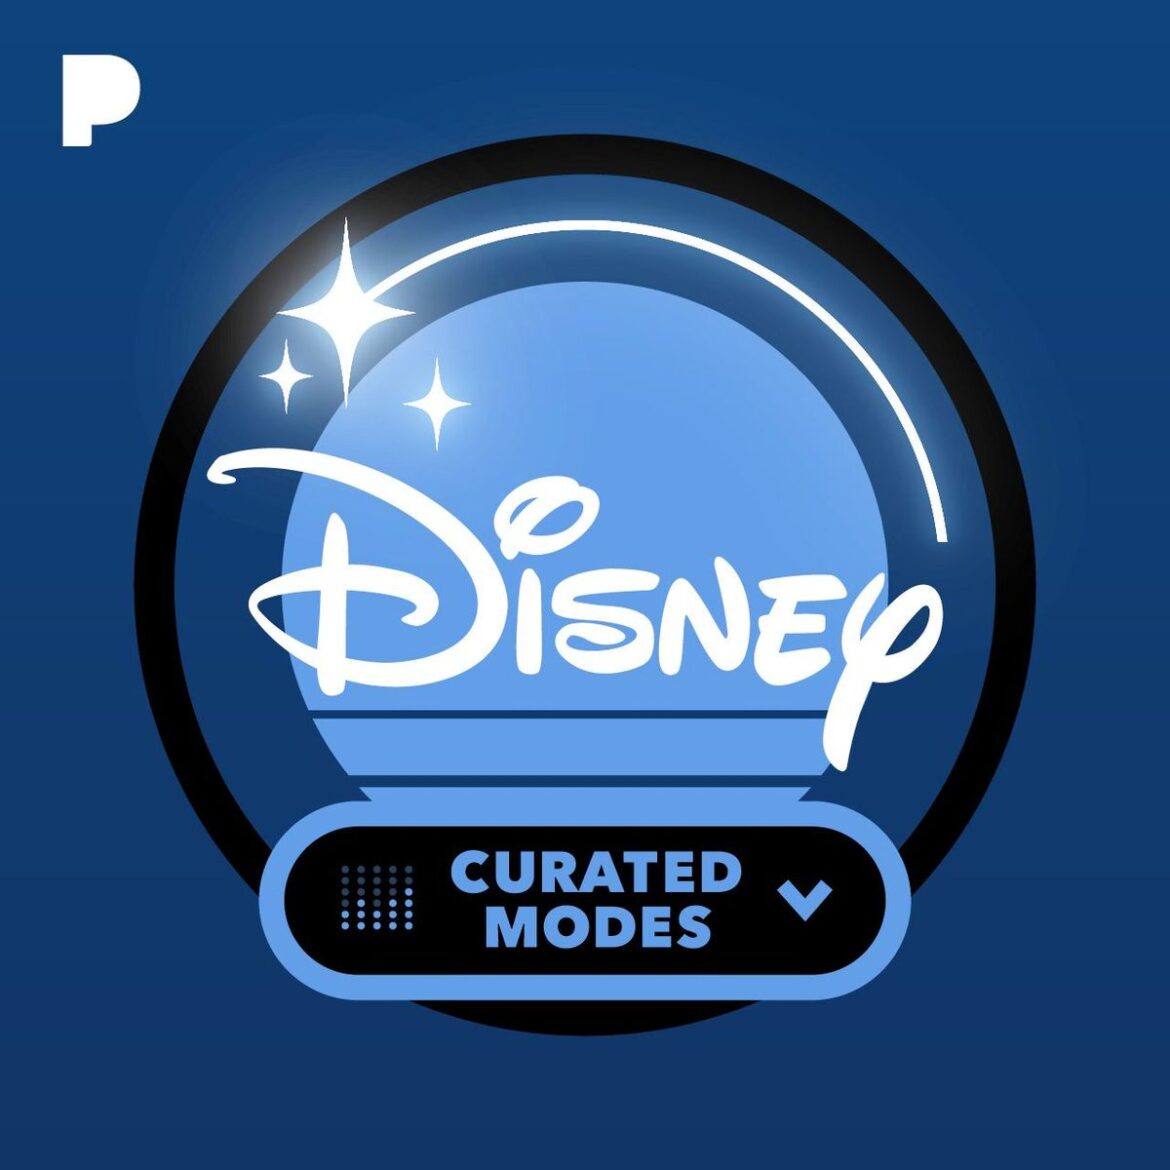 Pandora music launches new Disney music station!